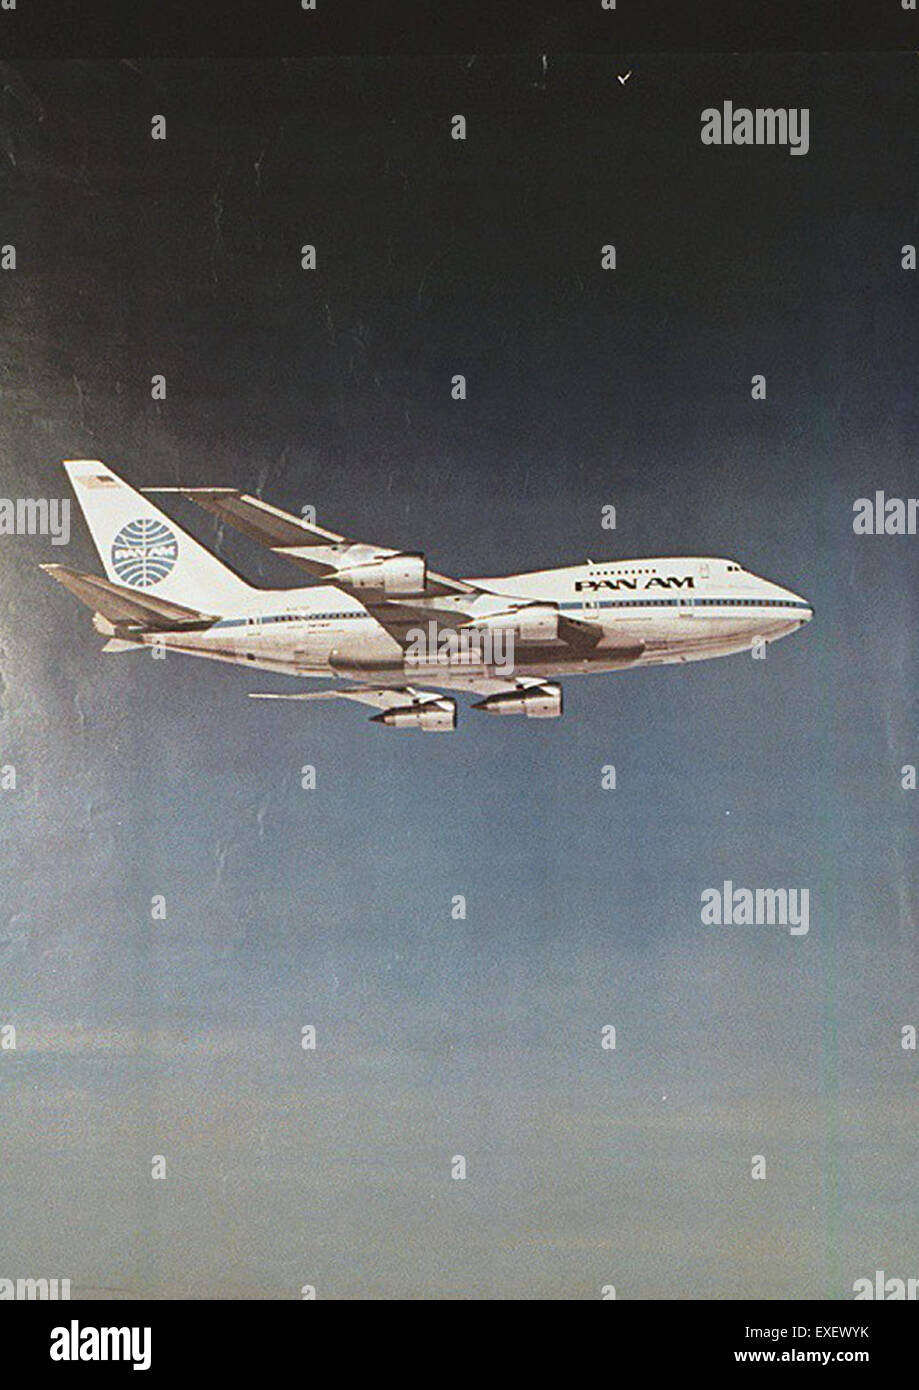 PanAm 747 Image Stock Photo